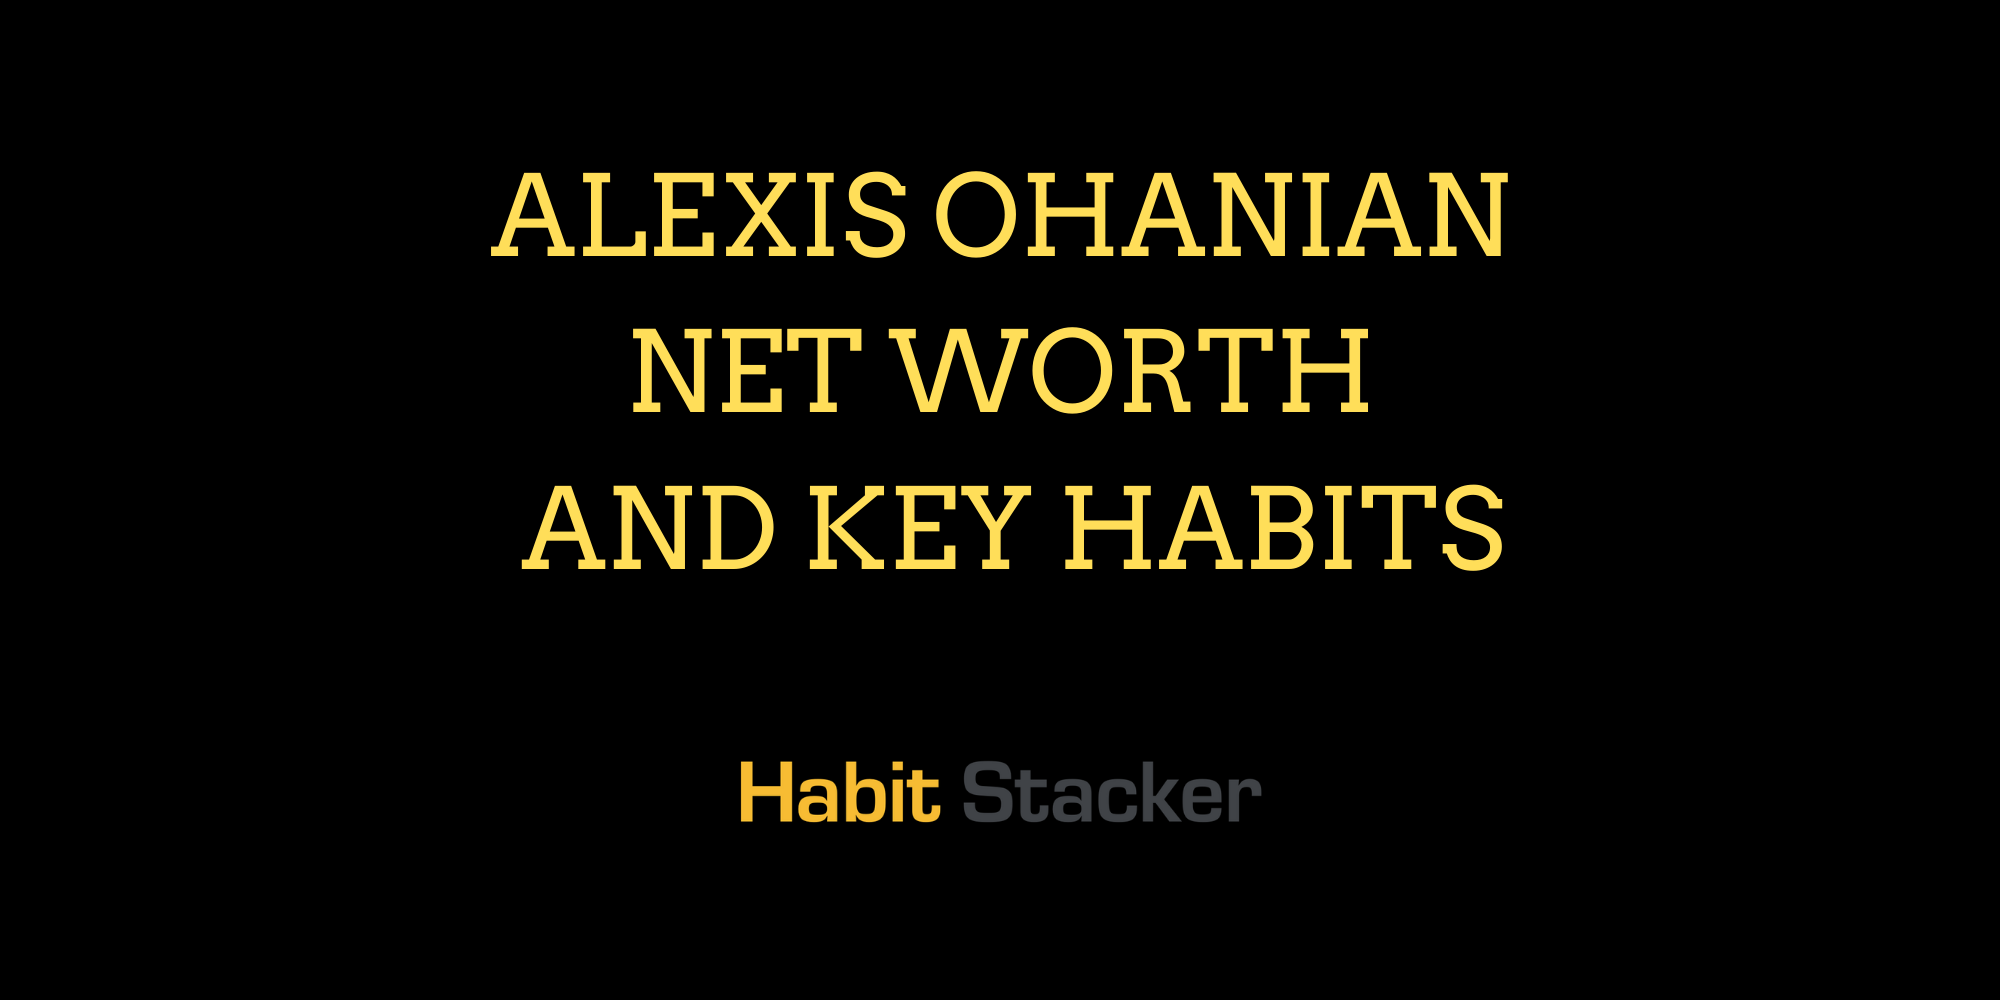 Alexis Ohanian Net worth and Key Habits